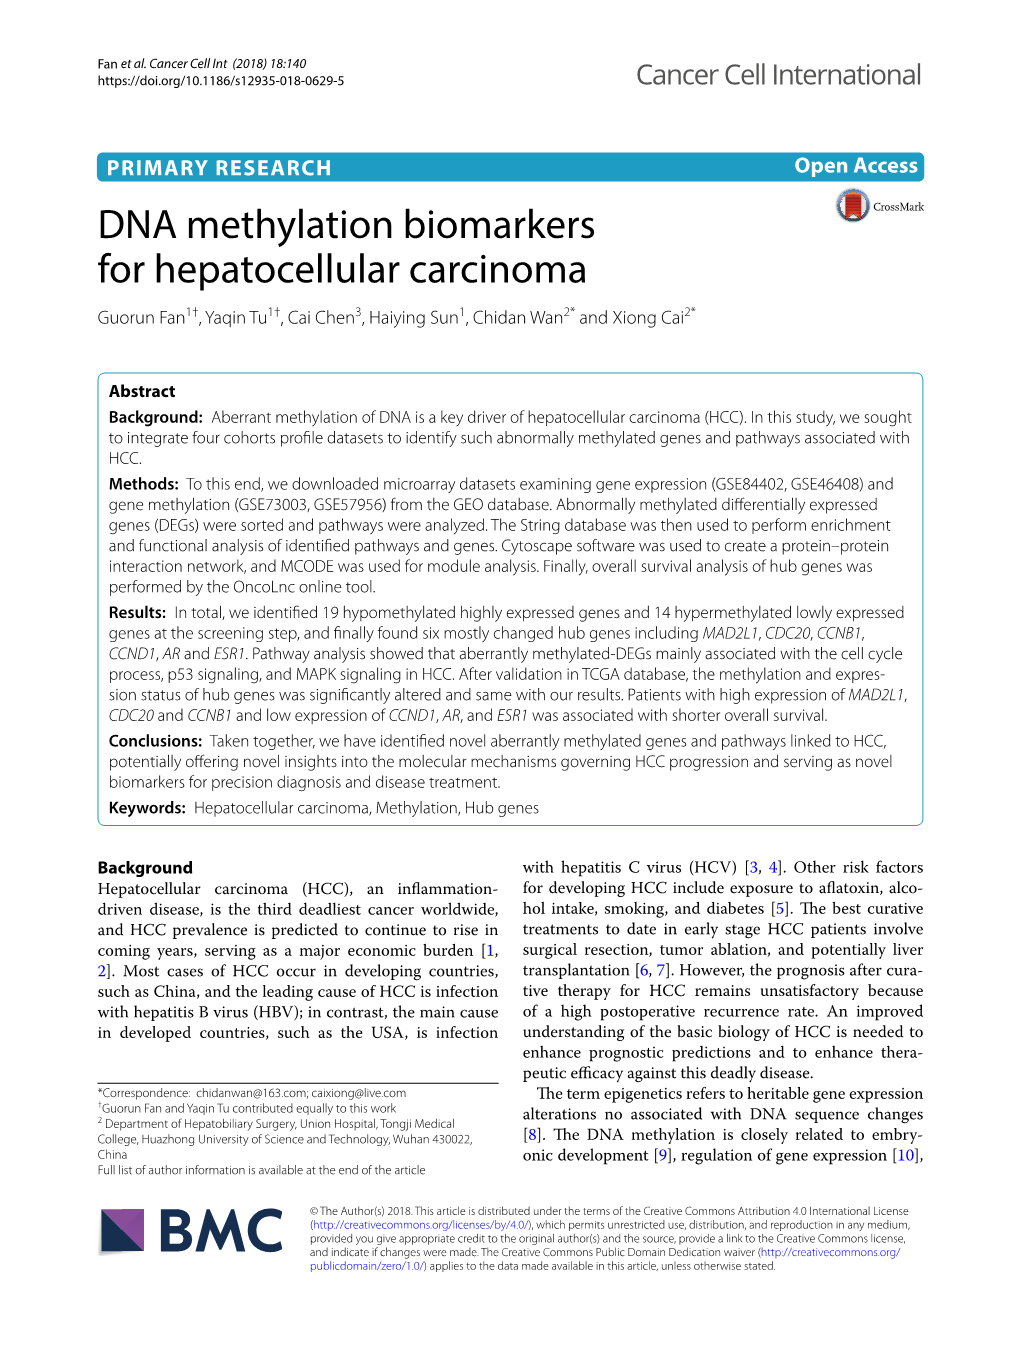 DNA Methylation Biomarkers for Hepatocellular Carcinoma Guorun Fan1†, Yaqin Tu1†, Cai Chen3, Haiying Sun1, Chidan Wan2* and Xiong Cai2*